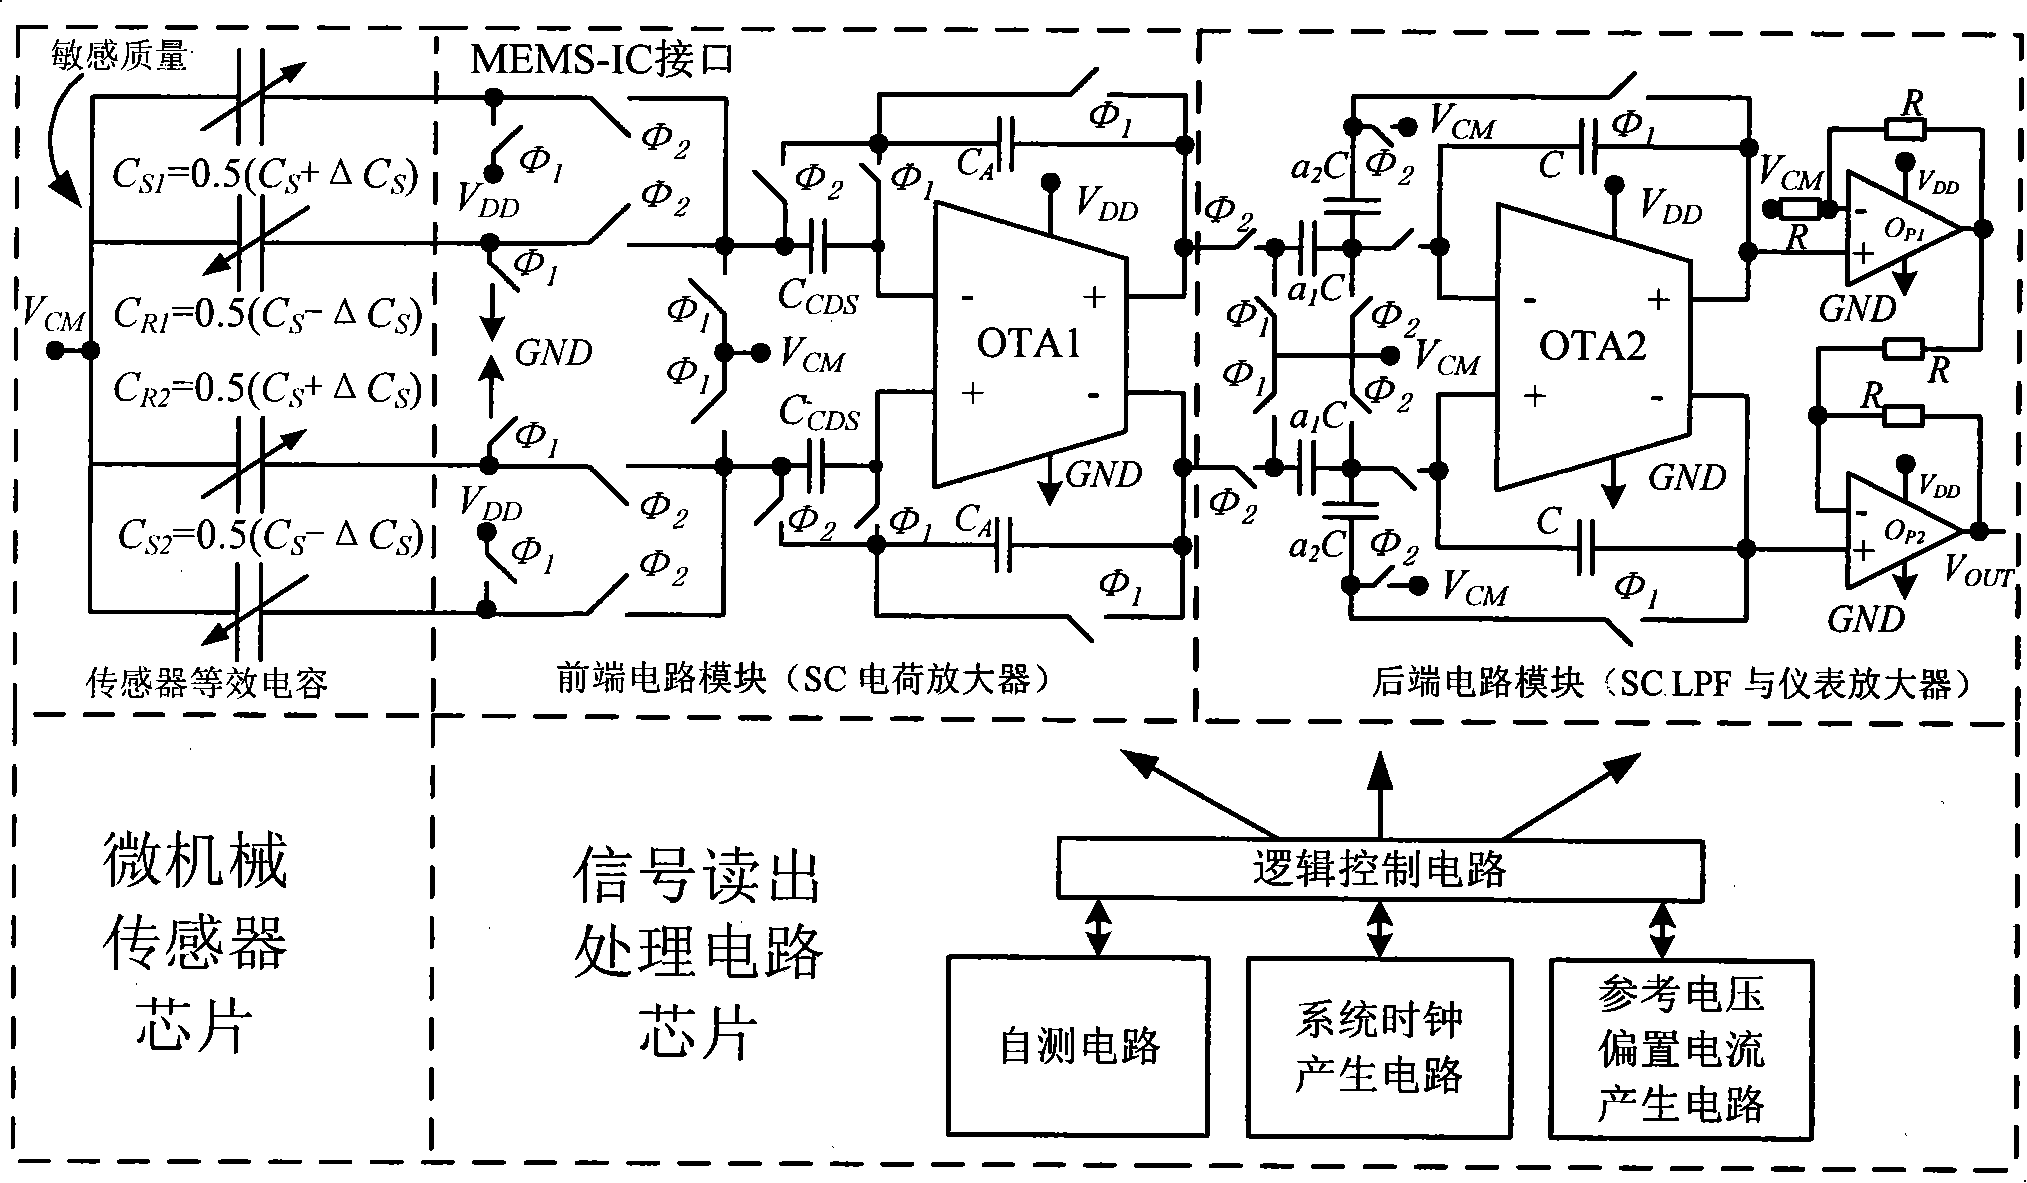 Capacitance type micro-accelerometer